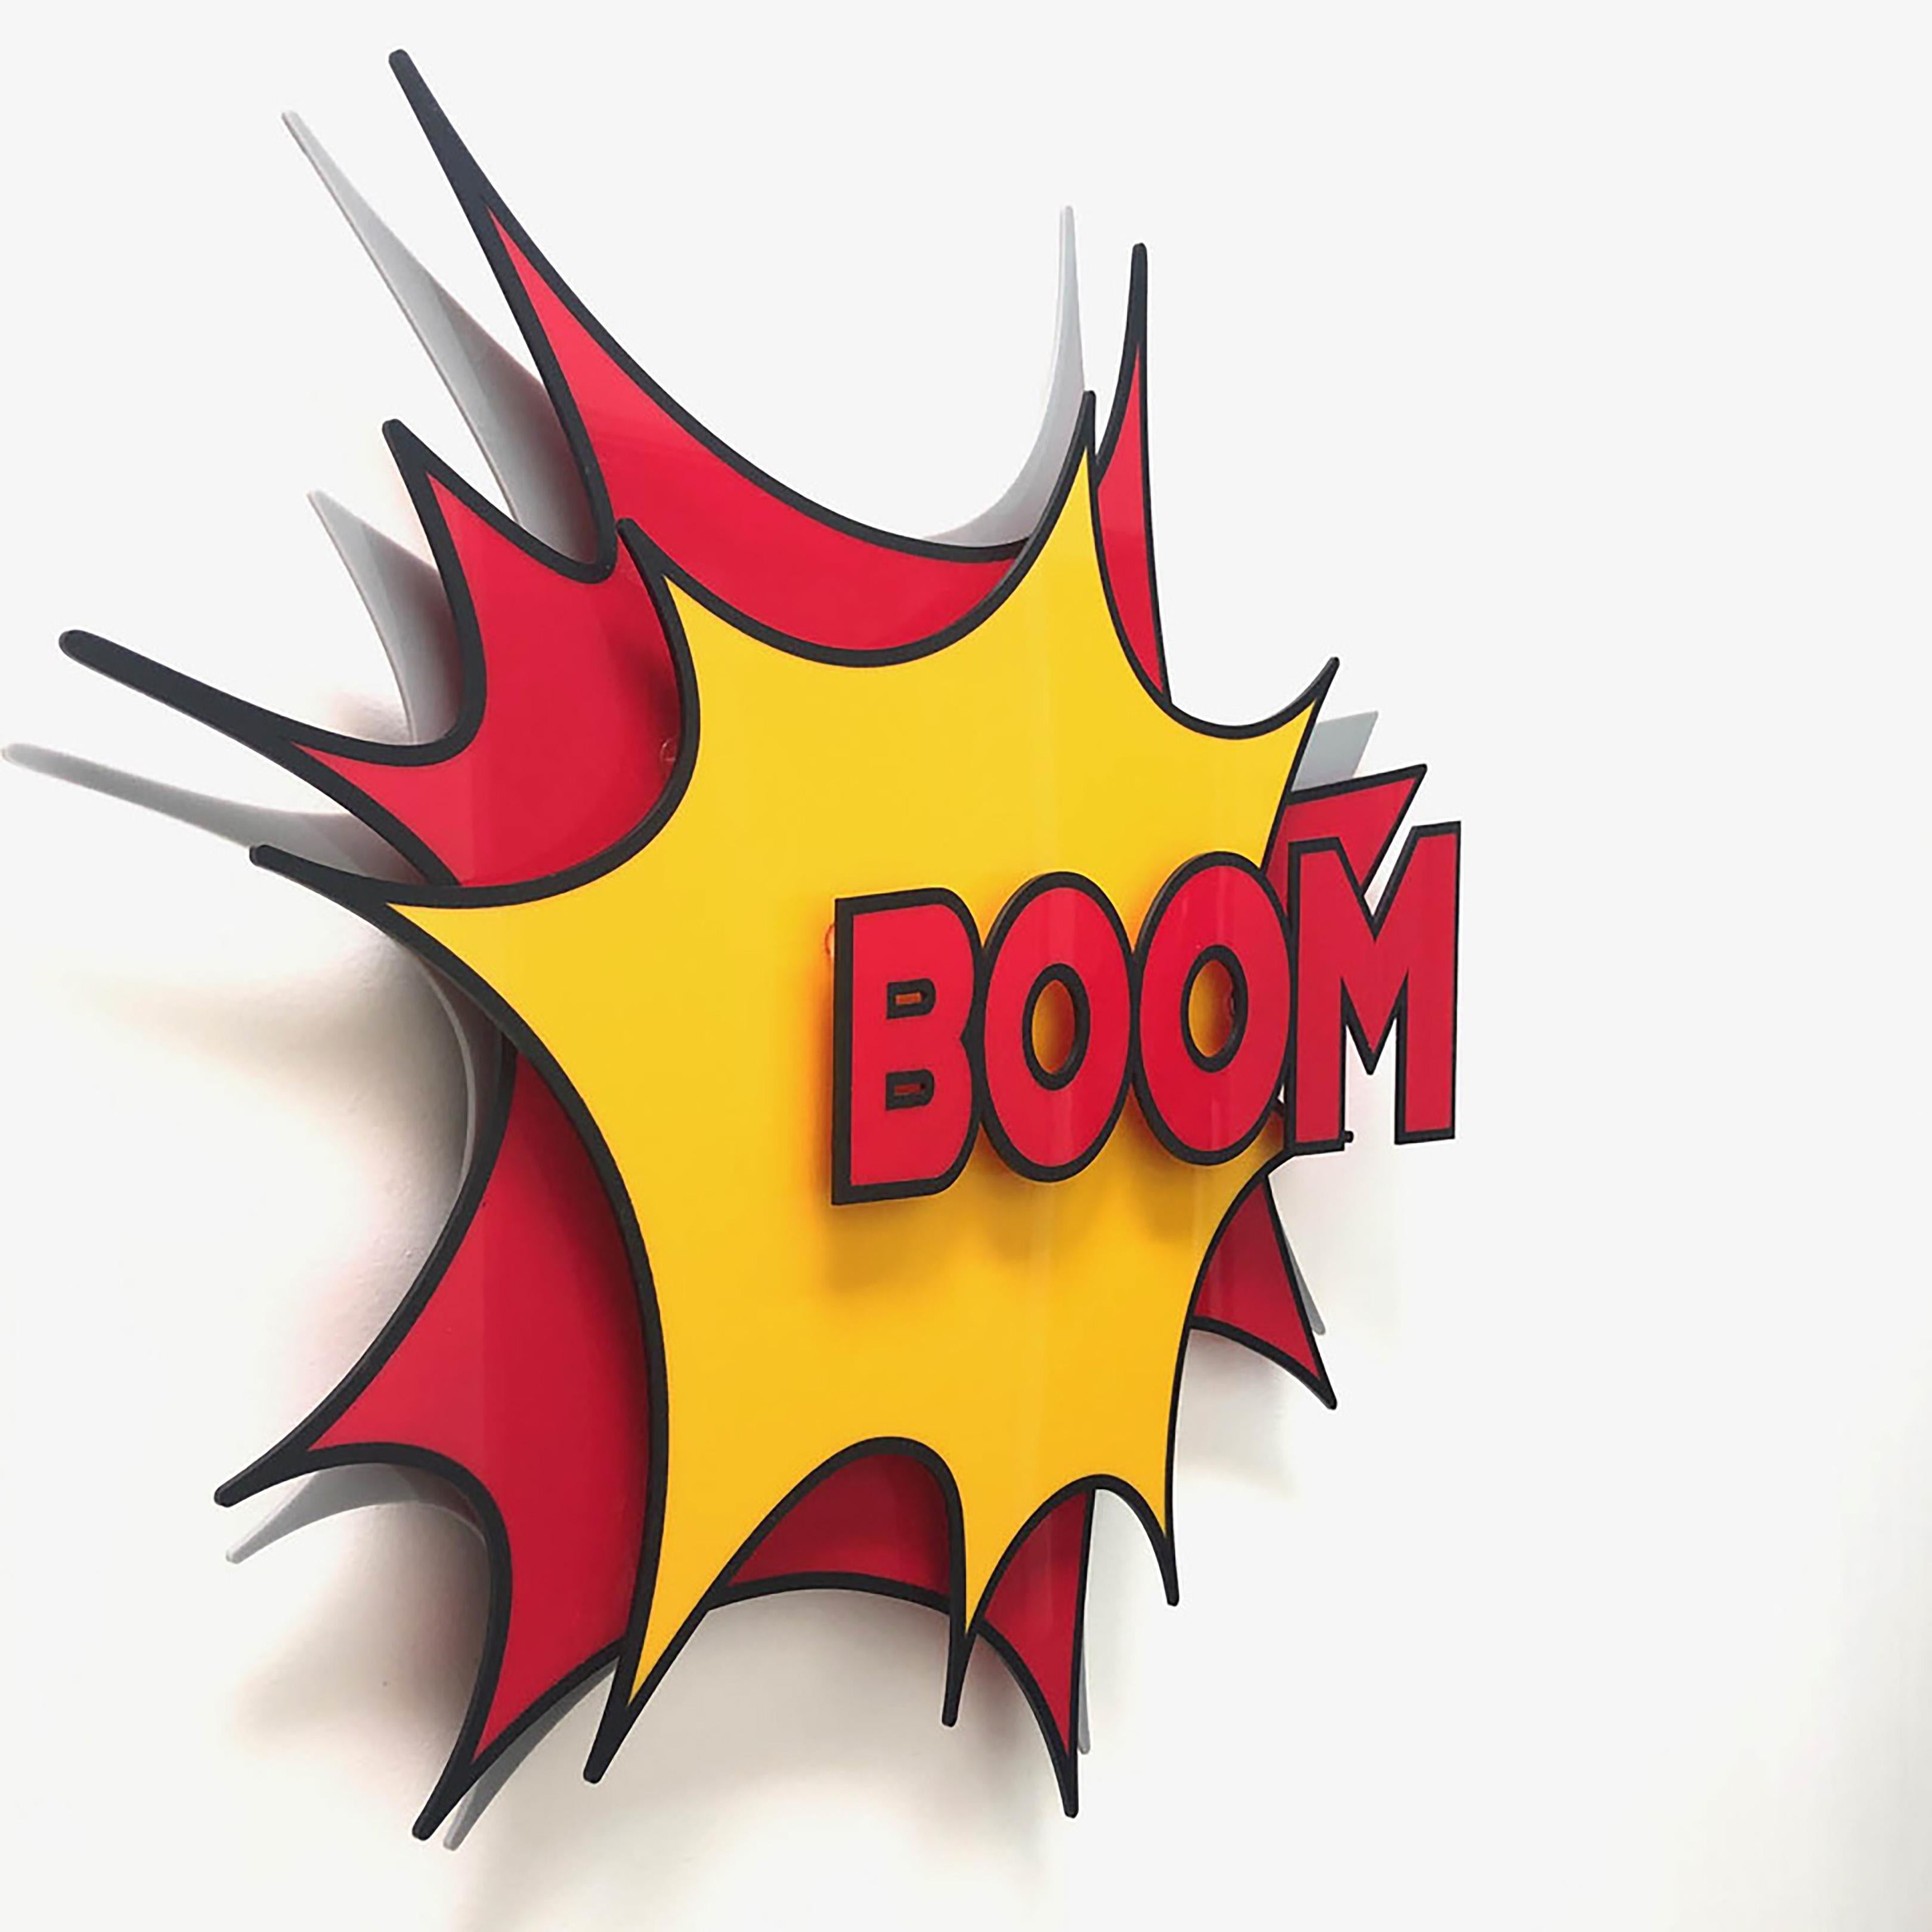  "Boom" Explosive 3D - 4 layer acrylic sculpture